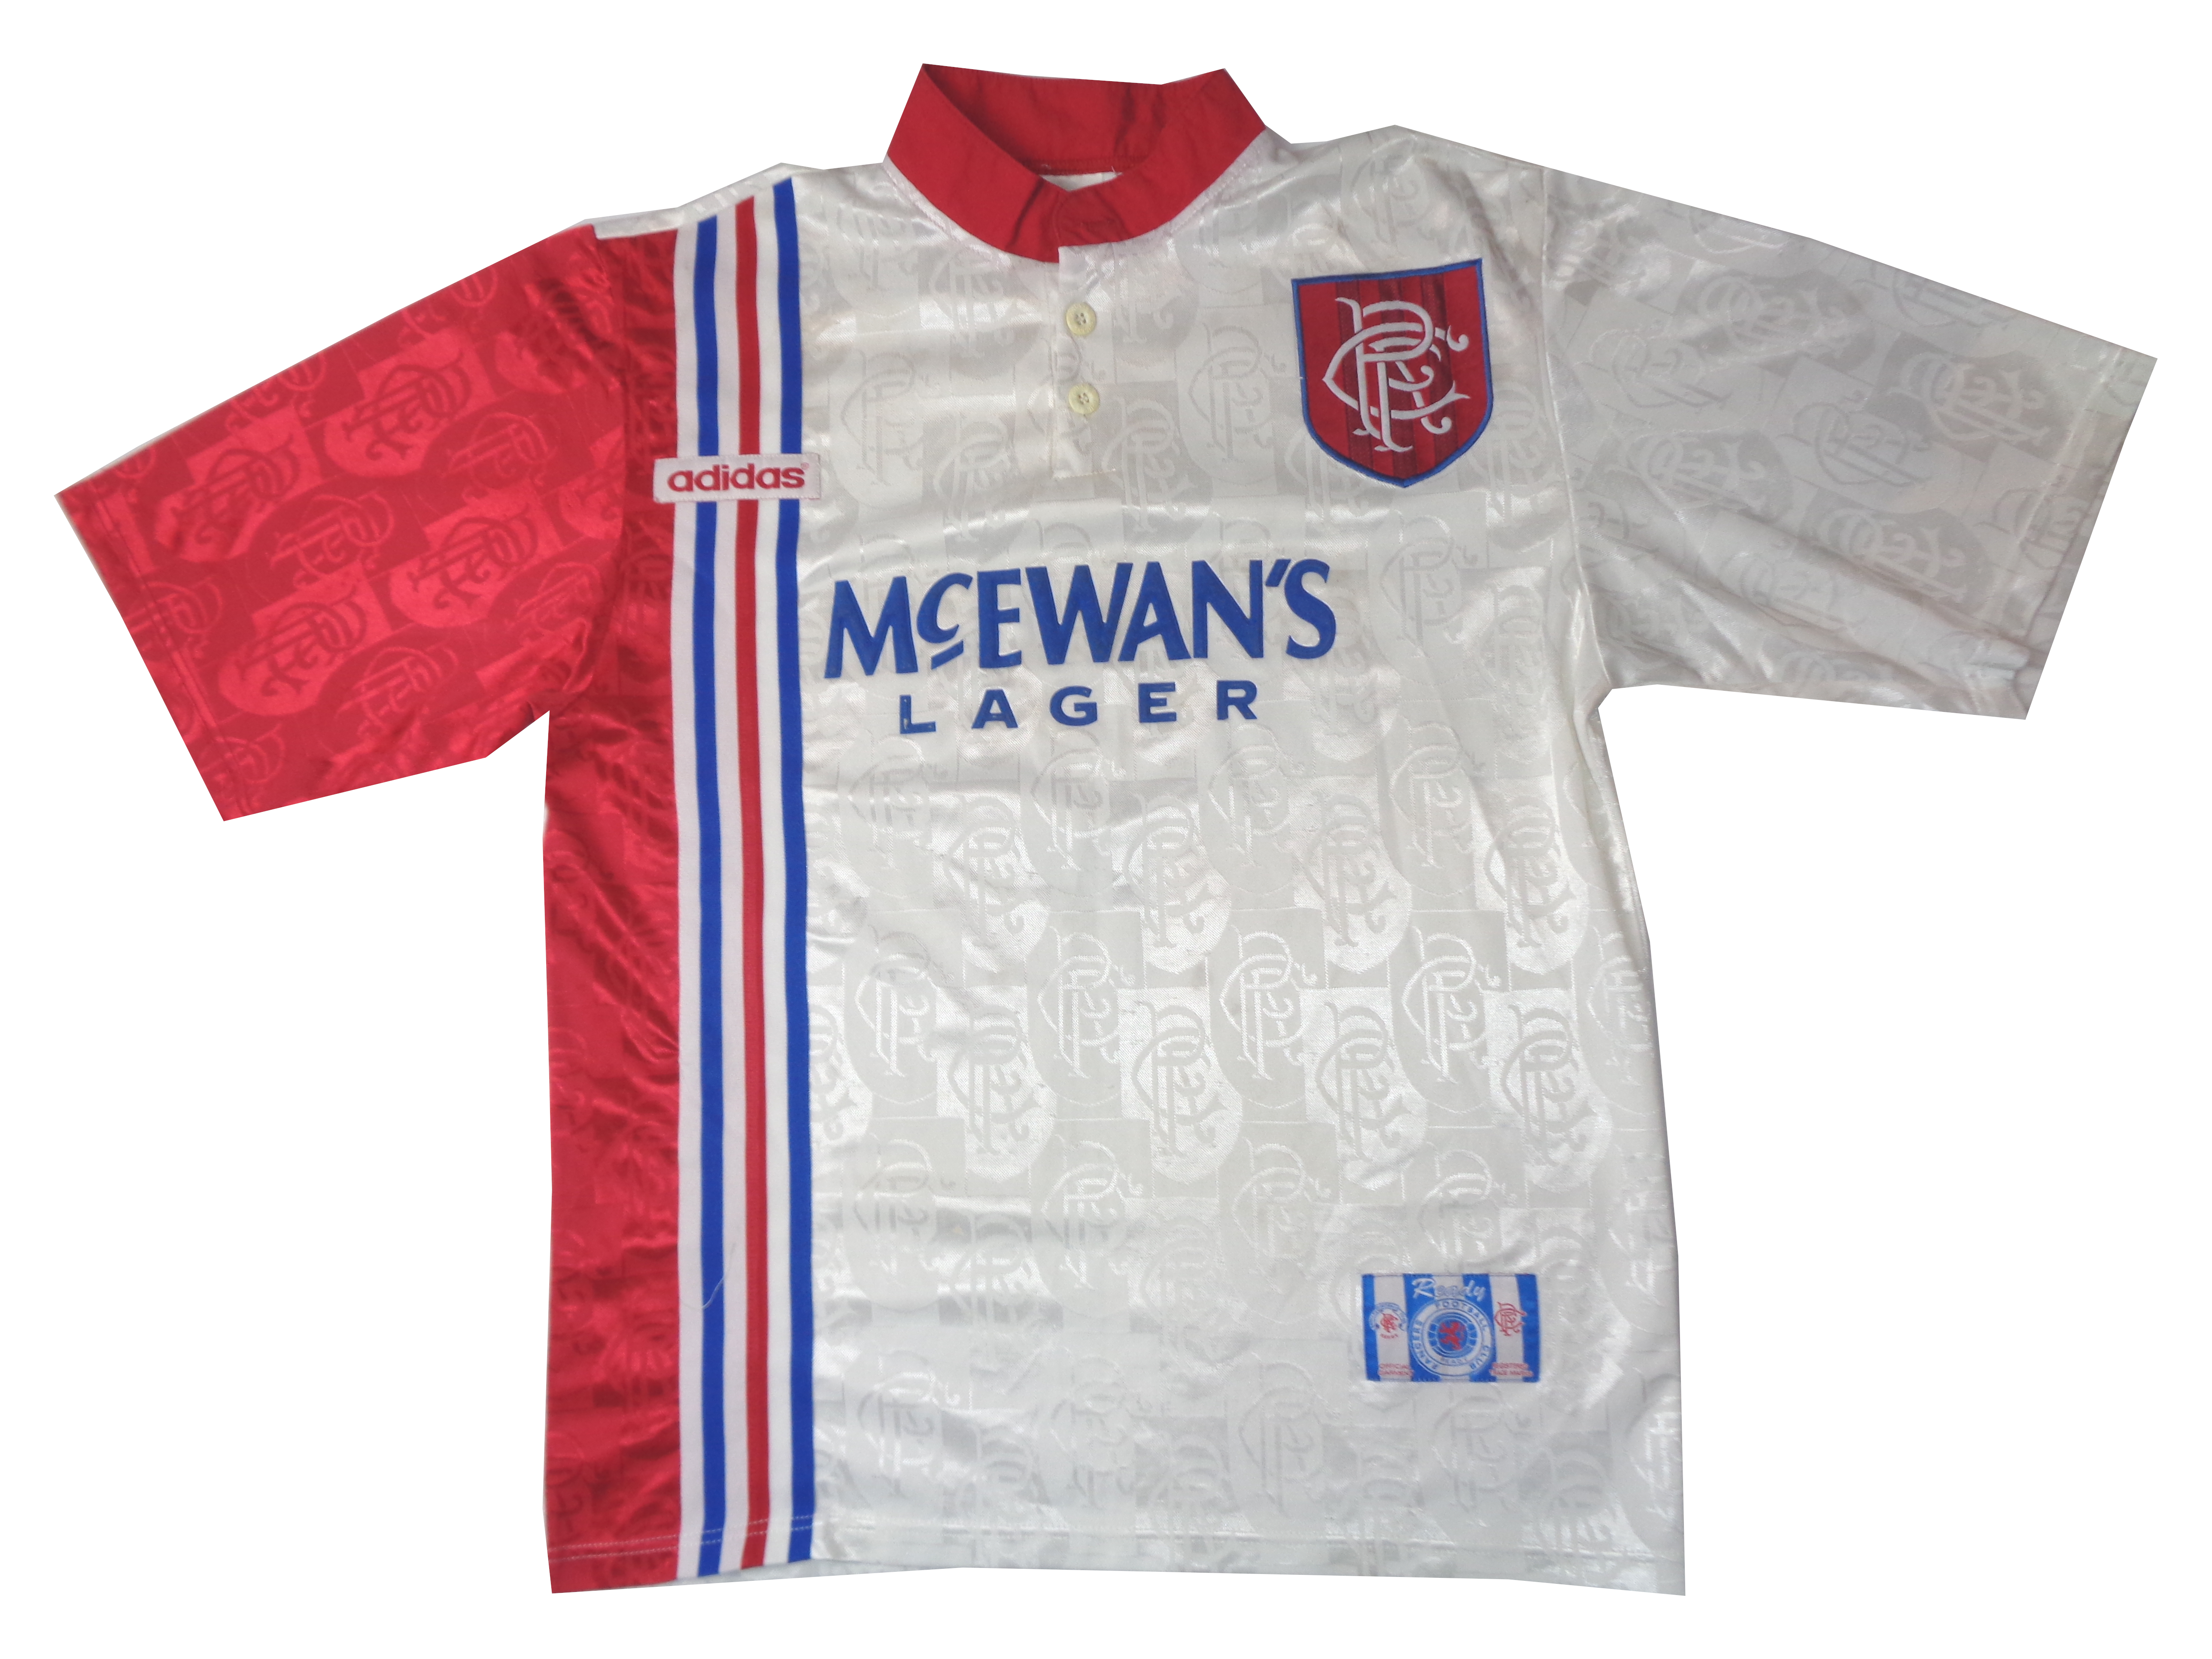 Rangers 96/97 Away Shirt - Inside Forwards